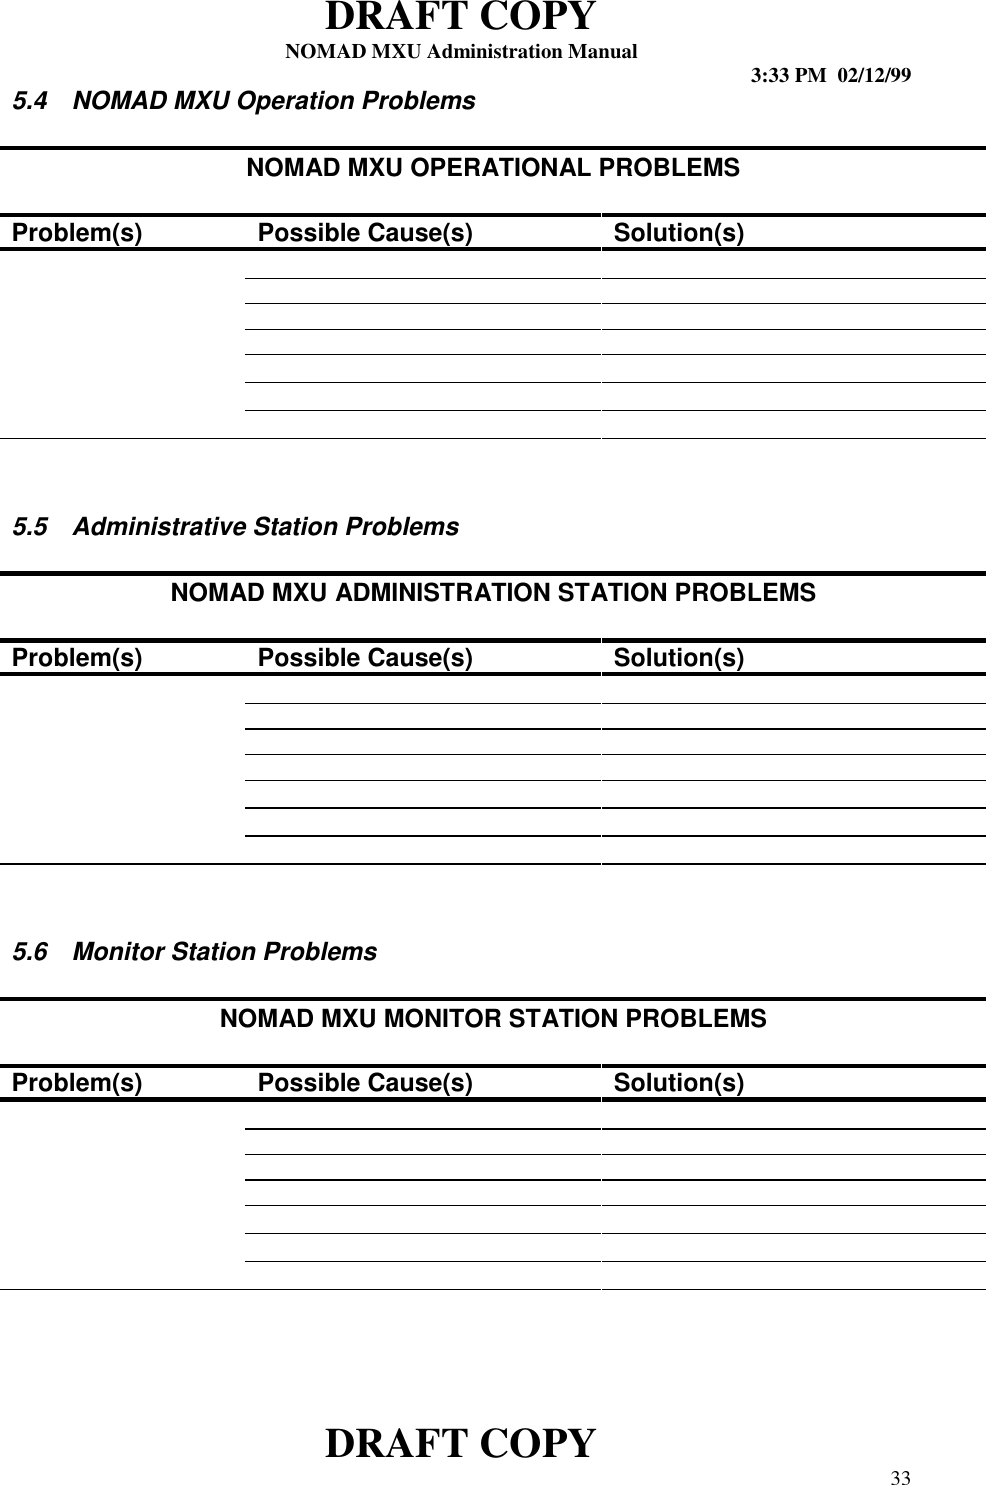 DRAFT COPYNOMAD MXU Administration Manual 3:33 PM  02/12/99DRAFT COPY 335.4  NOMAD MXU Operation ProblemsNOMAD MXU OPERATIONAL PROBLEMSProblem(s) Possible Cause(s) Solution(s)5.5  Administrative Station ProblemsNOMAD MXU ADMINISTRATION STATION PROBLEMSProblem(s) Possible Cause(s) Solution(s)5.6  Monitor Station ProblemsNOMAD MXU MONITOR STATION PROBLEMSProblem(s) Possible Cause(s) Solution(s)